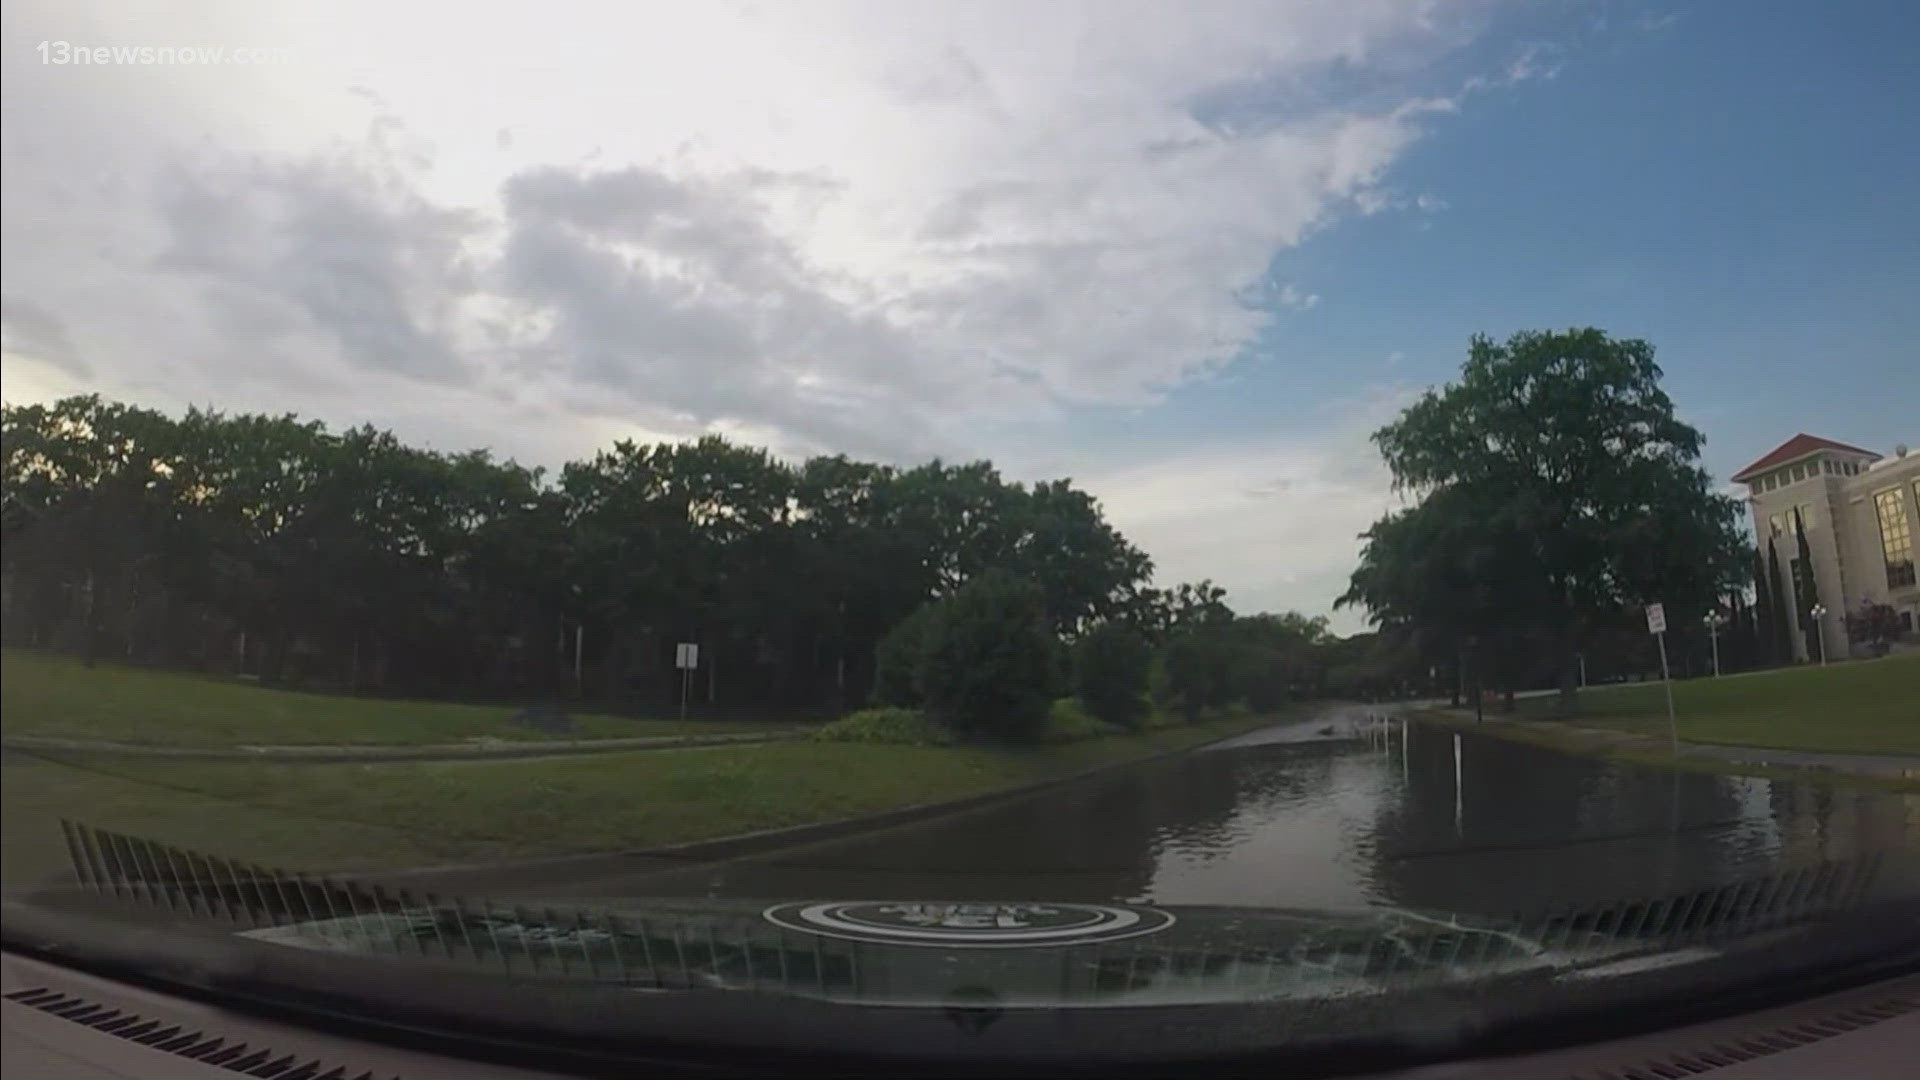 There has been heavy rain and flooding across Hampton Roads.